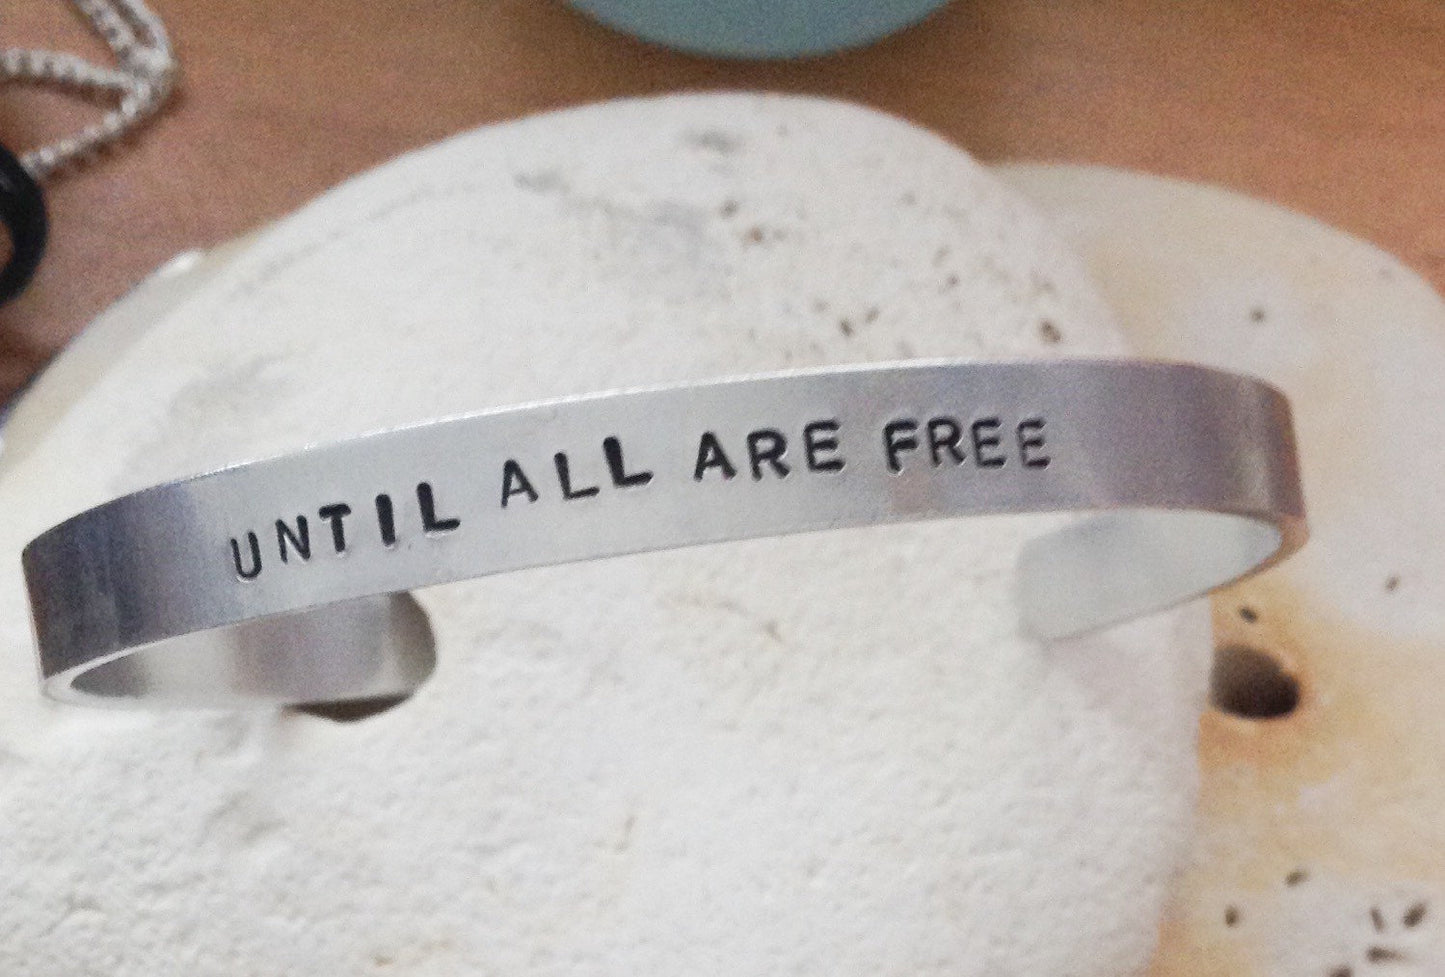 Until All Are Free Bracelet